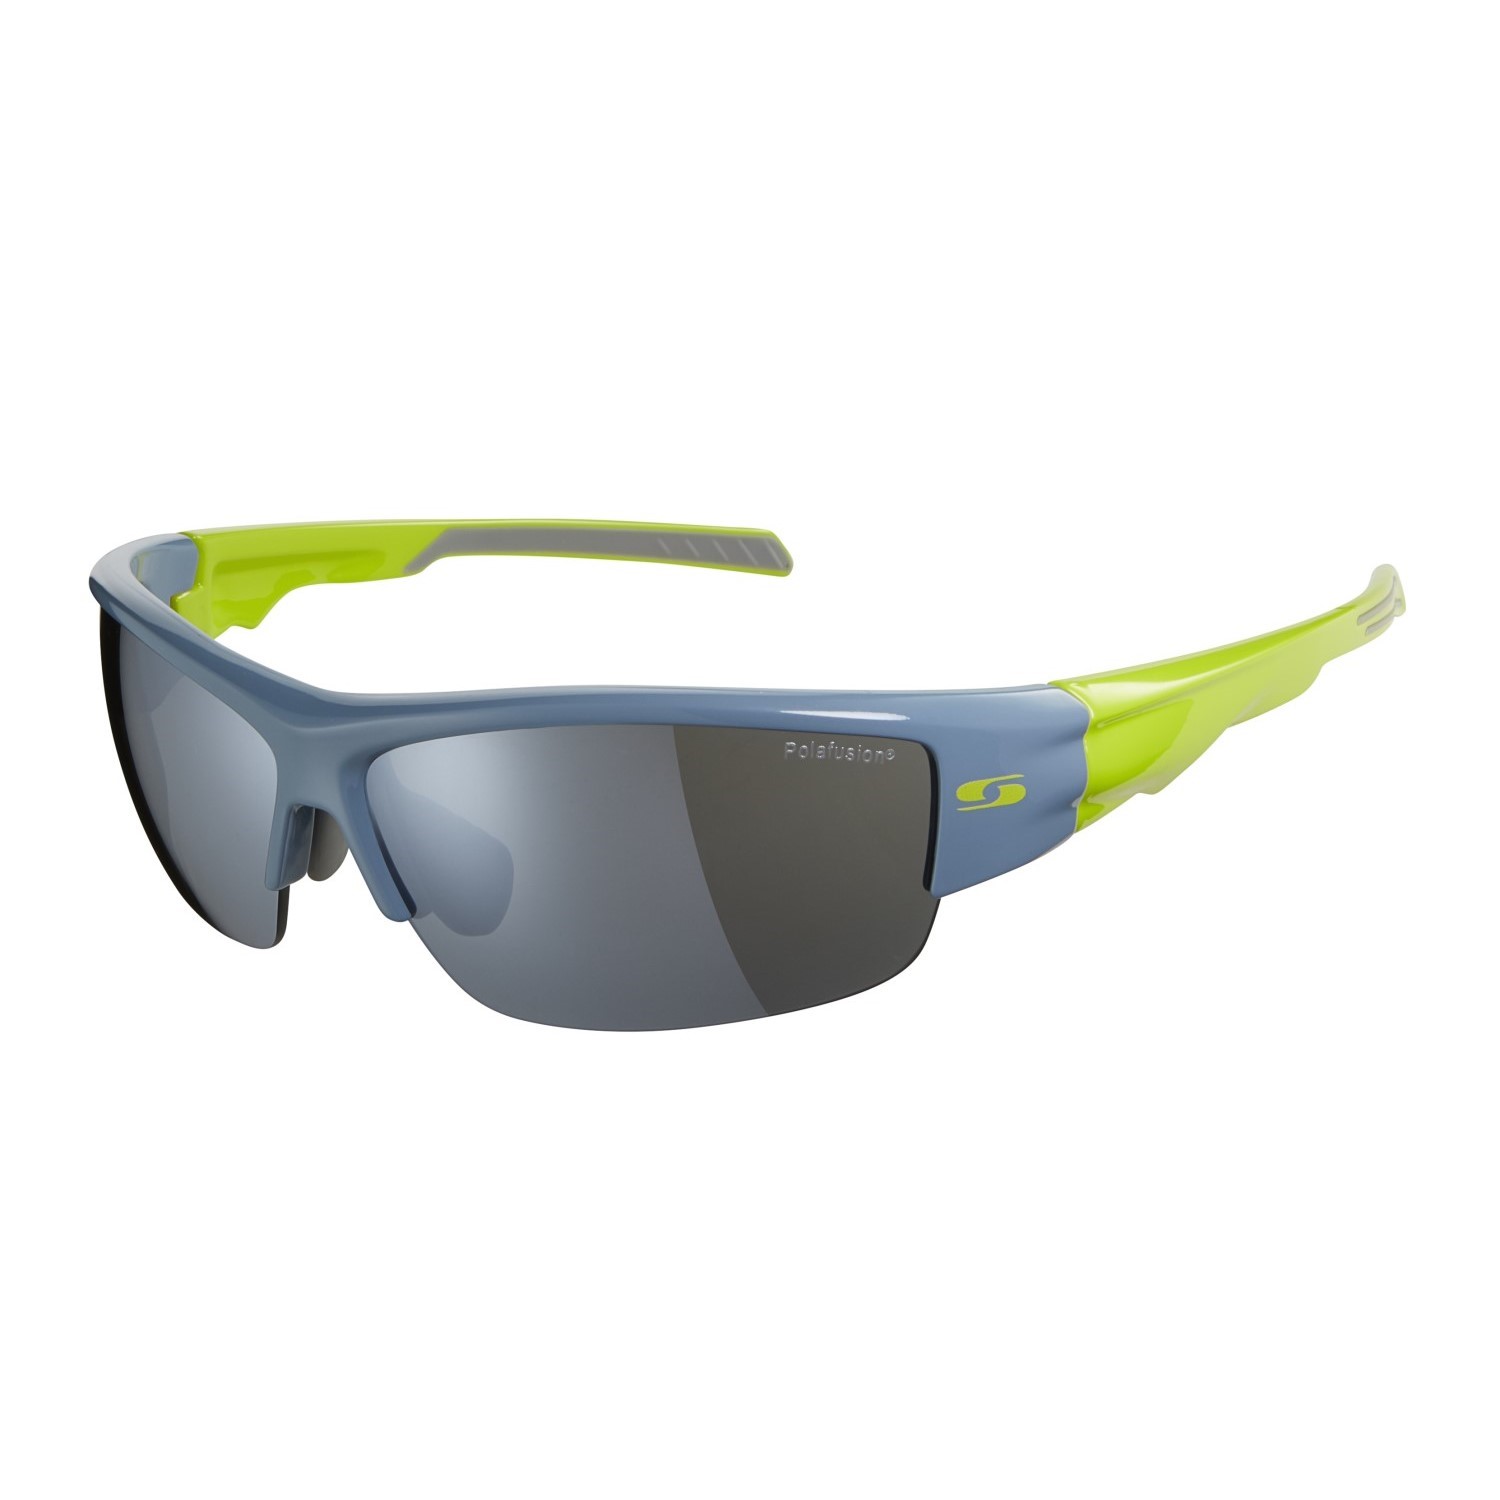 Sunwise Parade Polarised Water Repellent Sports Sunglasses - Grey